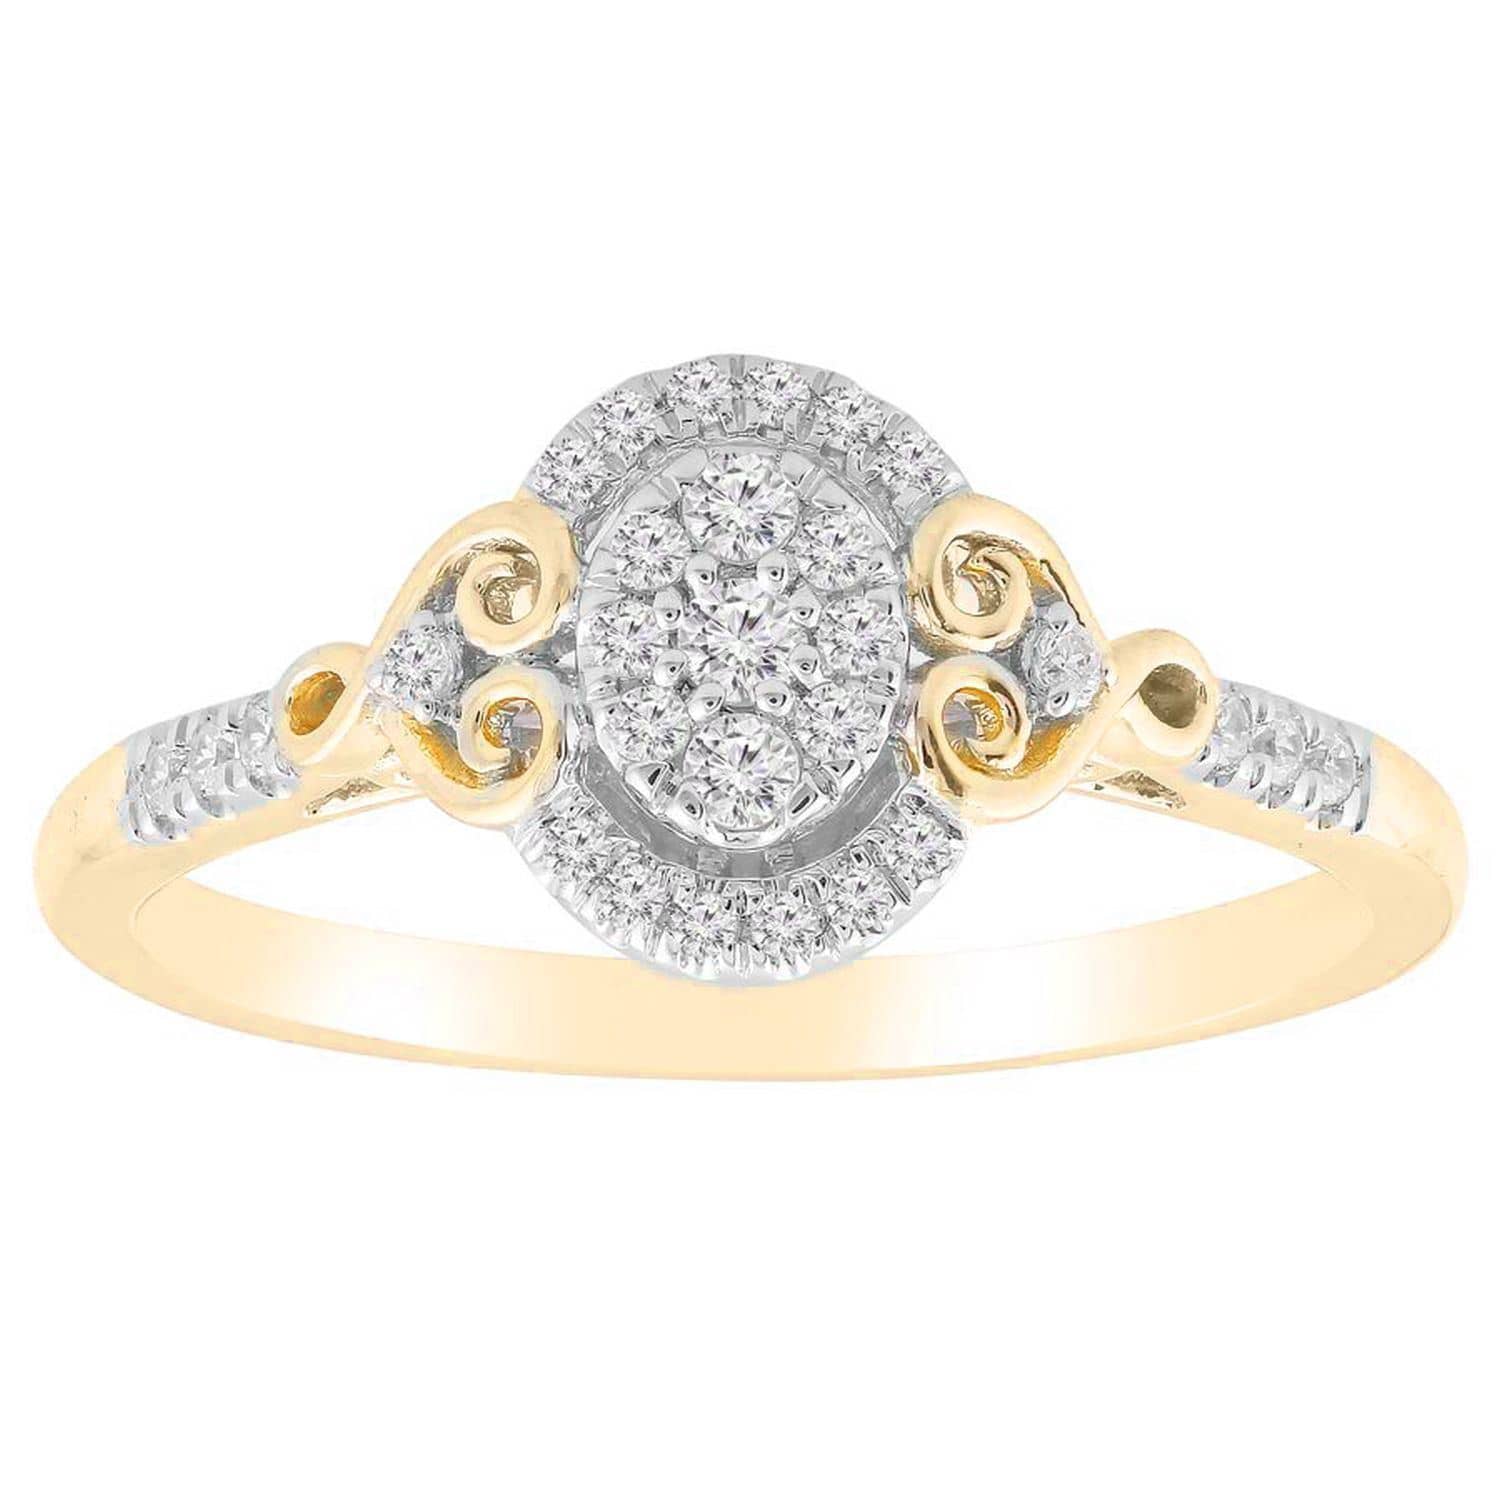 0015727_ladies-ring-15-ct-round-diamond-10k-yellow-gold.jpeg